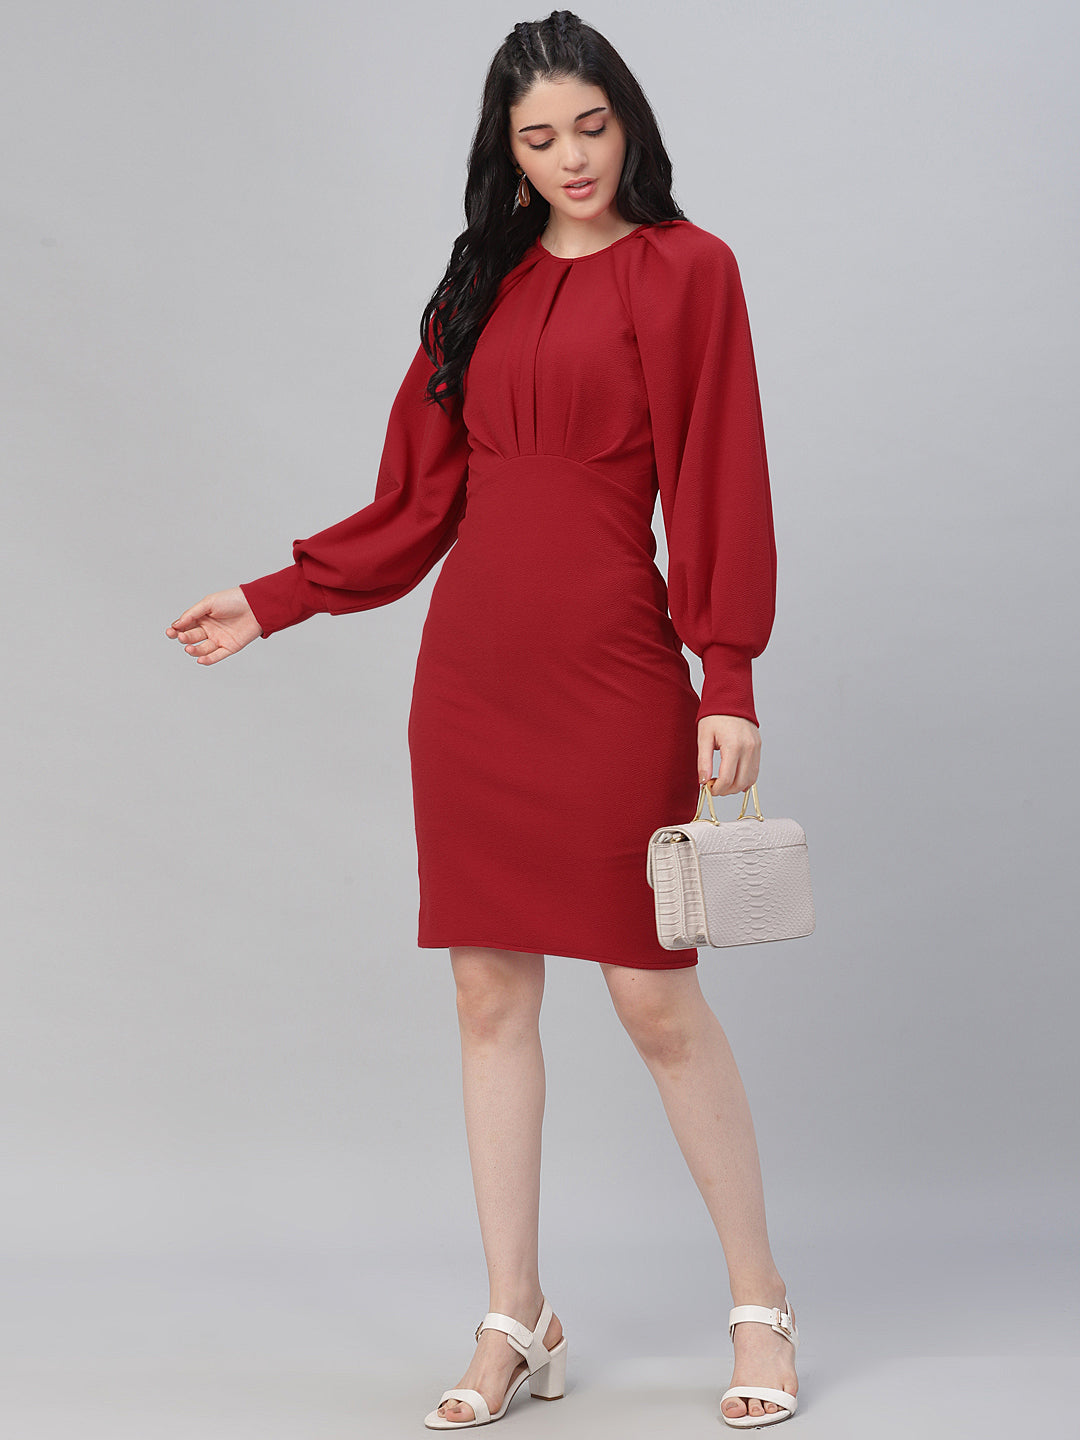 Athena Red Sheath Dress - Athena Lifestyle